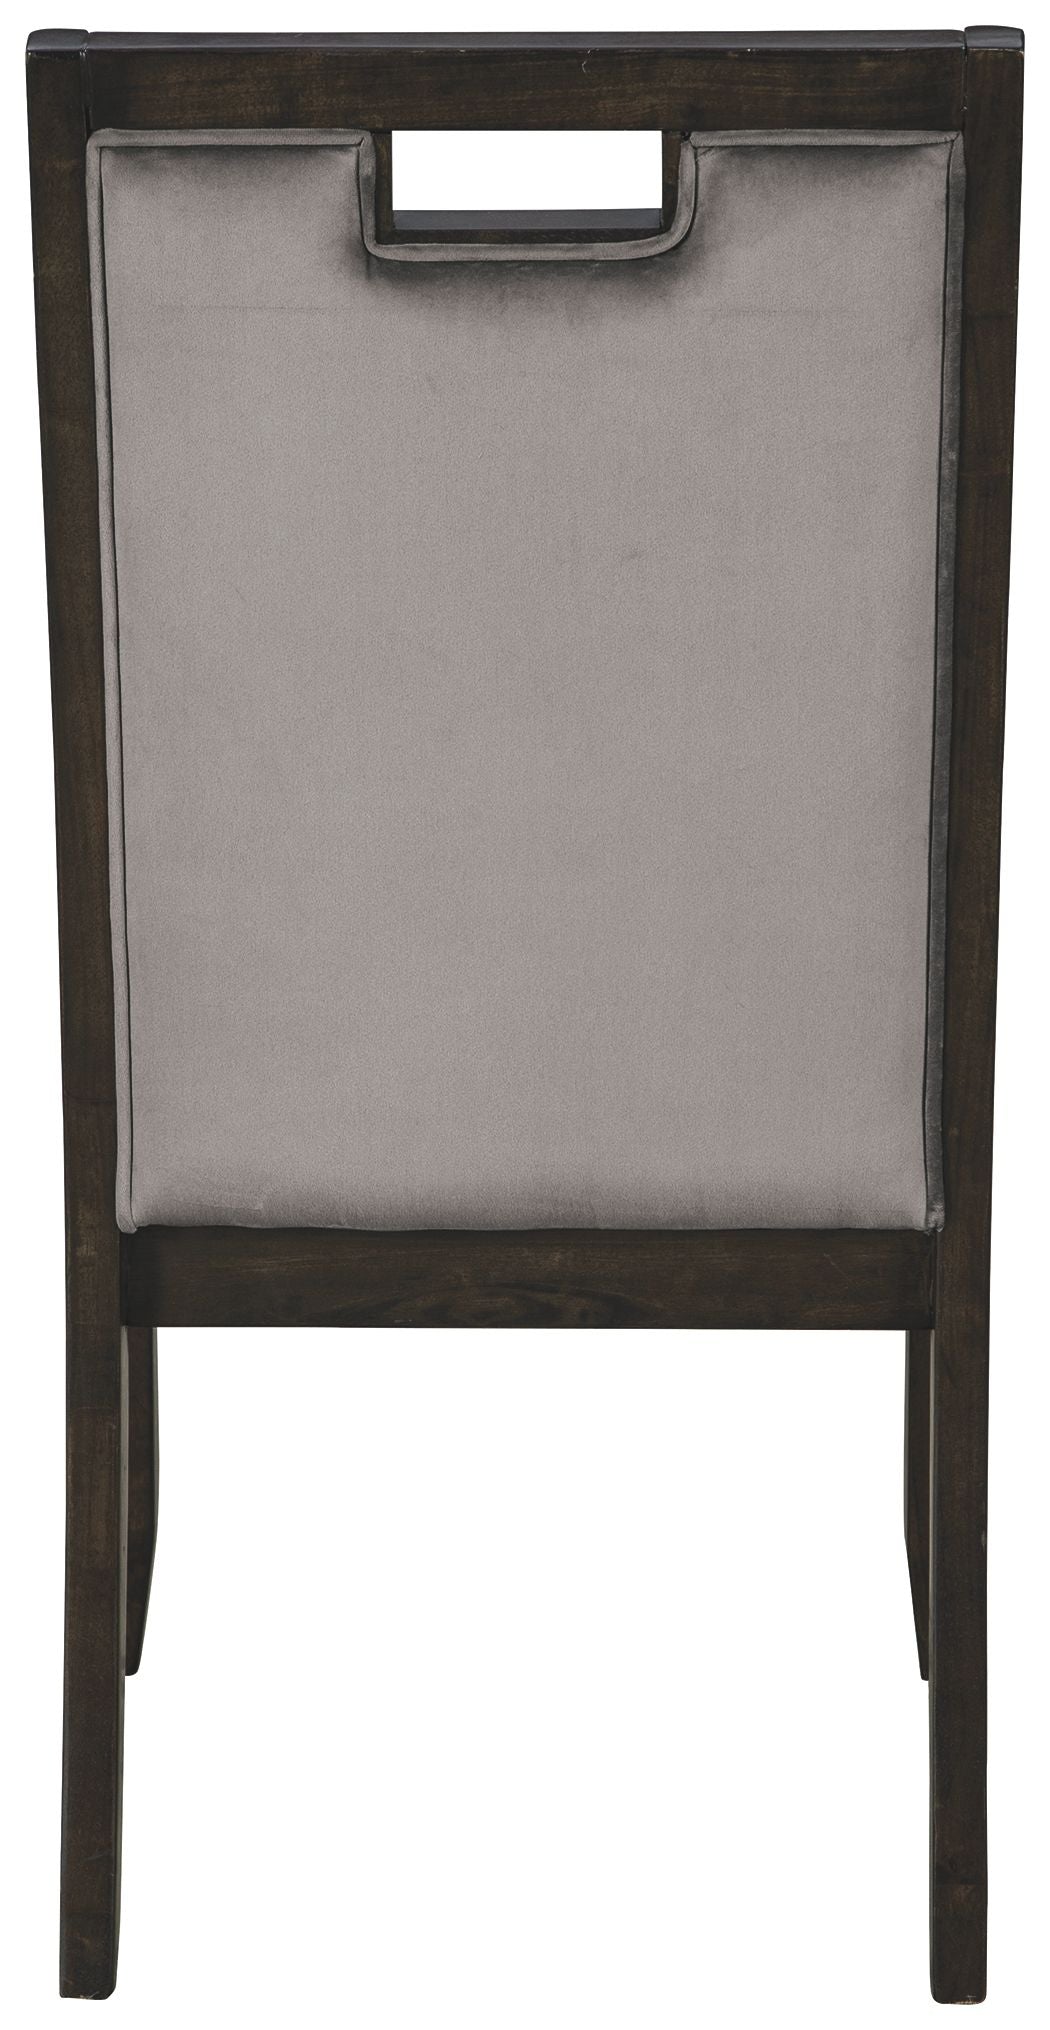 Hyndell - Gray / Dark Brown - Dining Uph Side Chair (Set of 2)